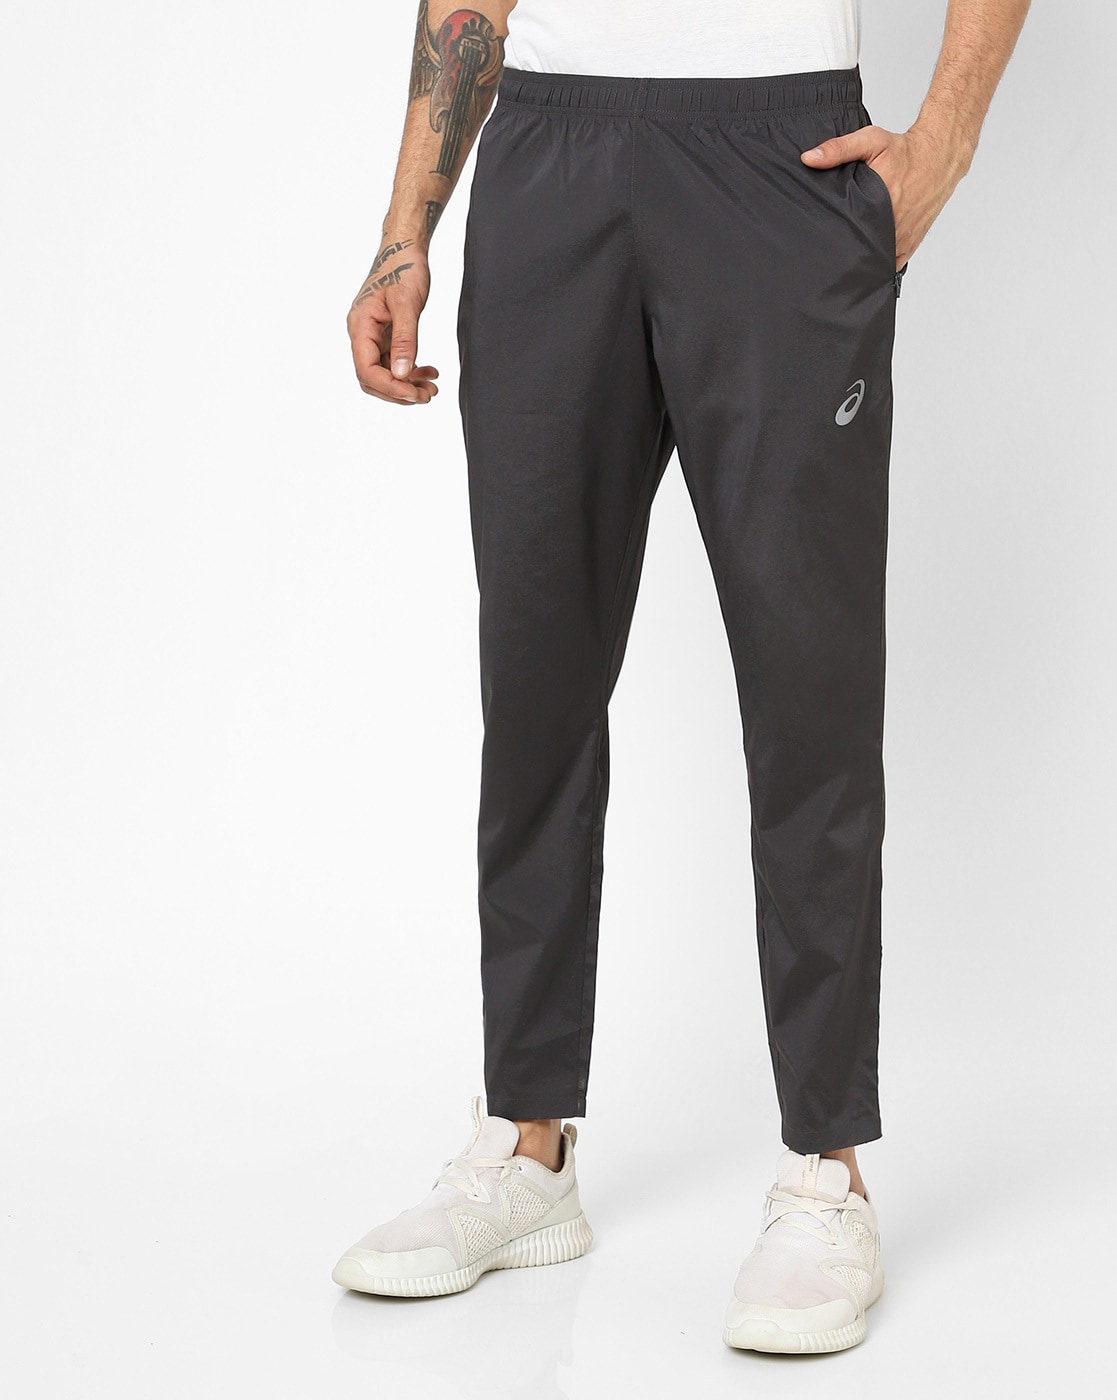 Buy Grey Track Pants for Men by ASICS Online  Ajiocom